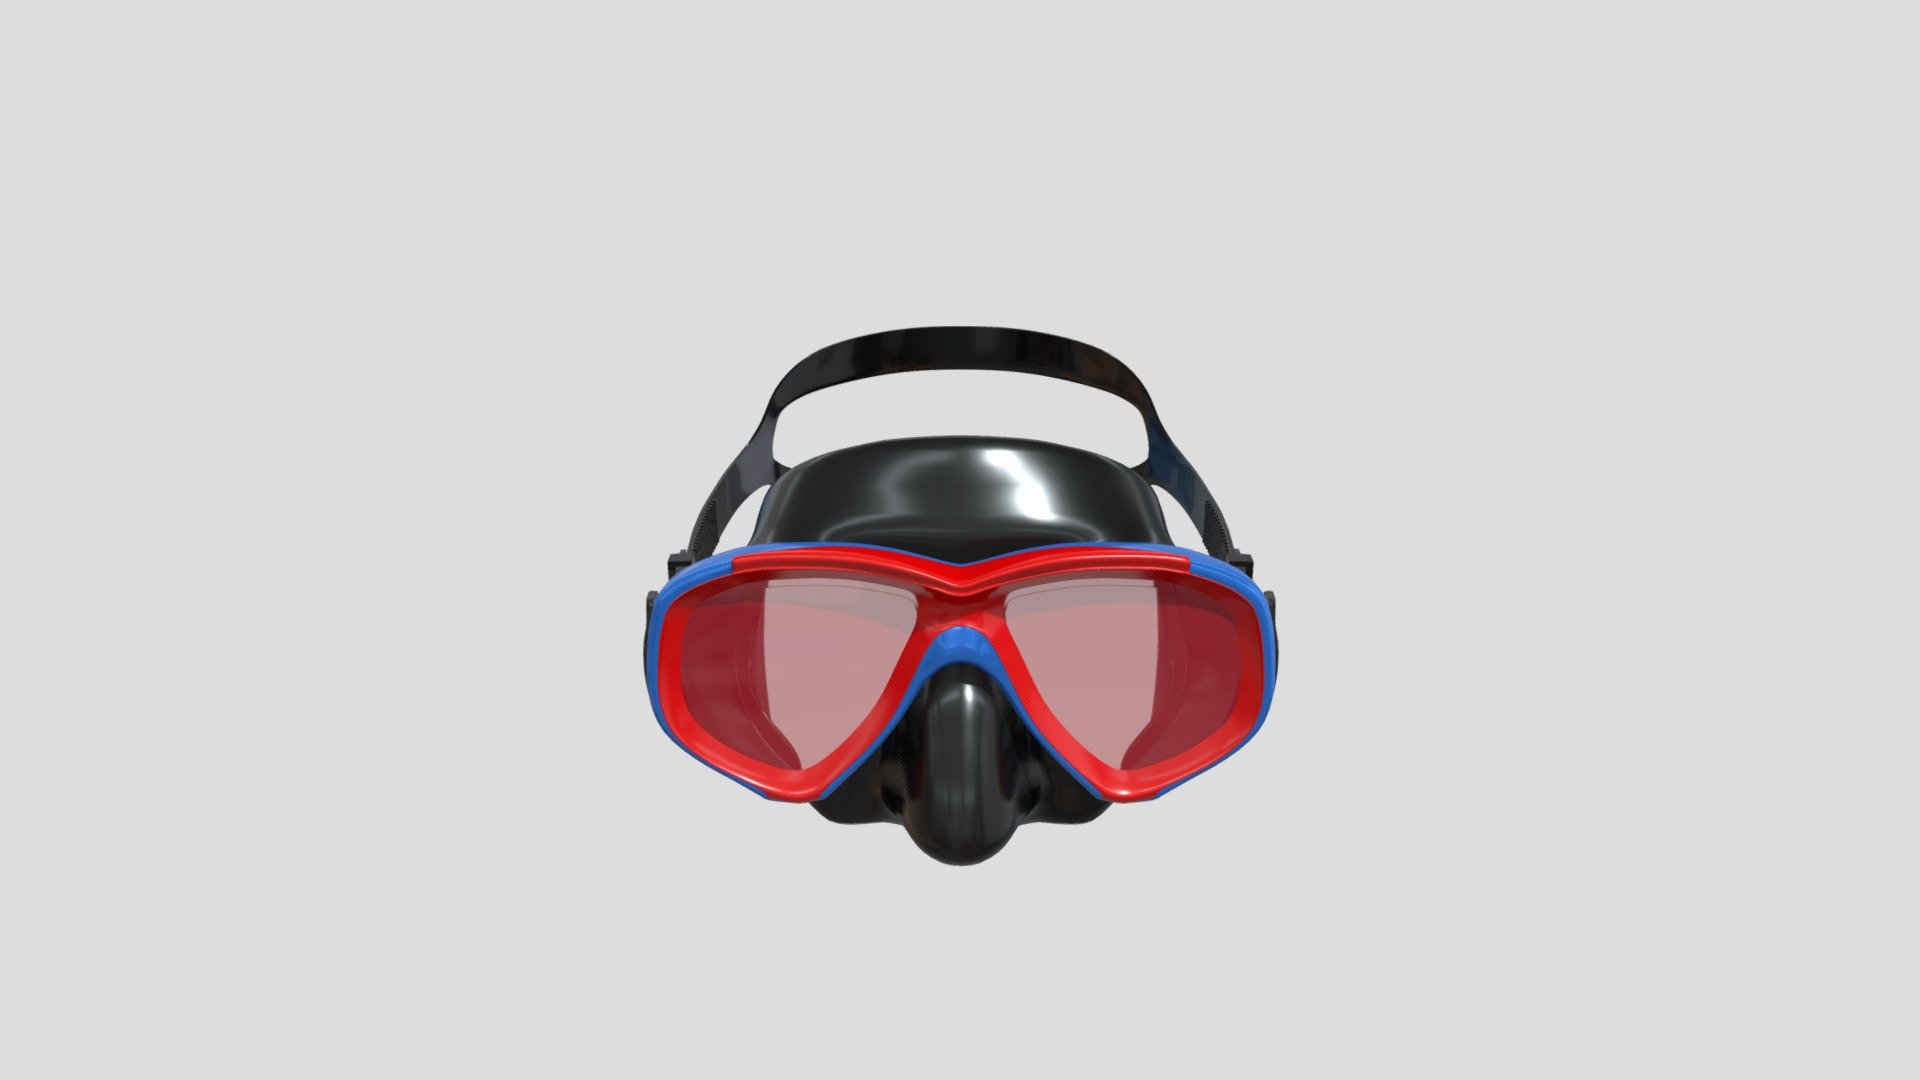 Mask, Maschera Subacquea Monovetro Temperato - Maschera subacquea - Diving mask - FST studio - 3D model by FSTstudio 3d model